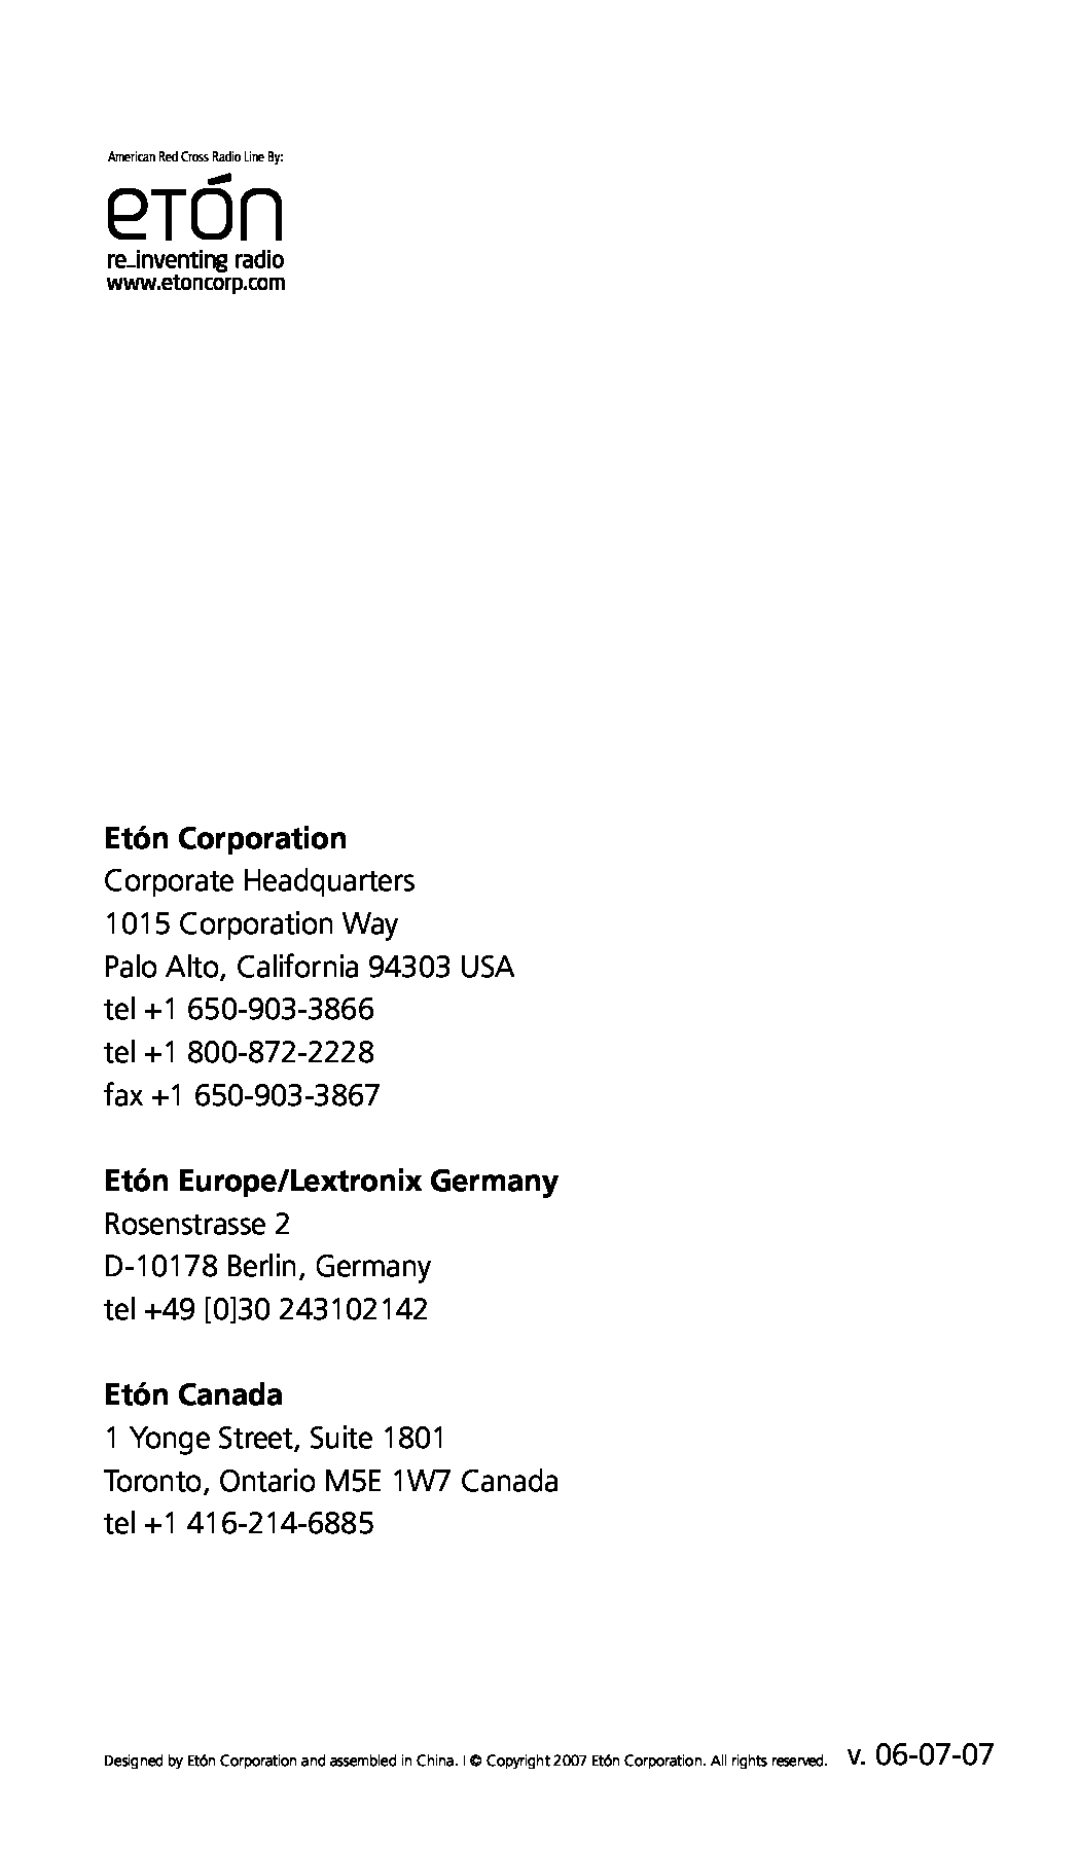 Eton FR250 owner manual Etón Corporation, Etón Europe/Lextronix Germany, Etón Canada 